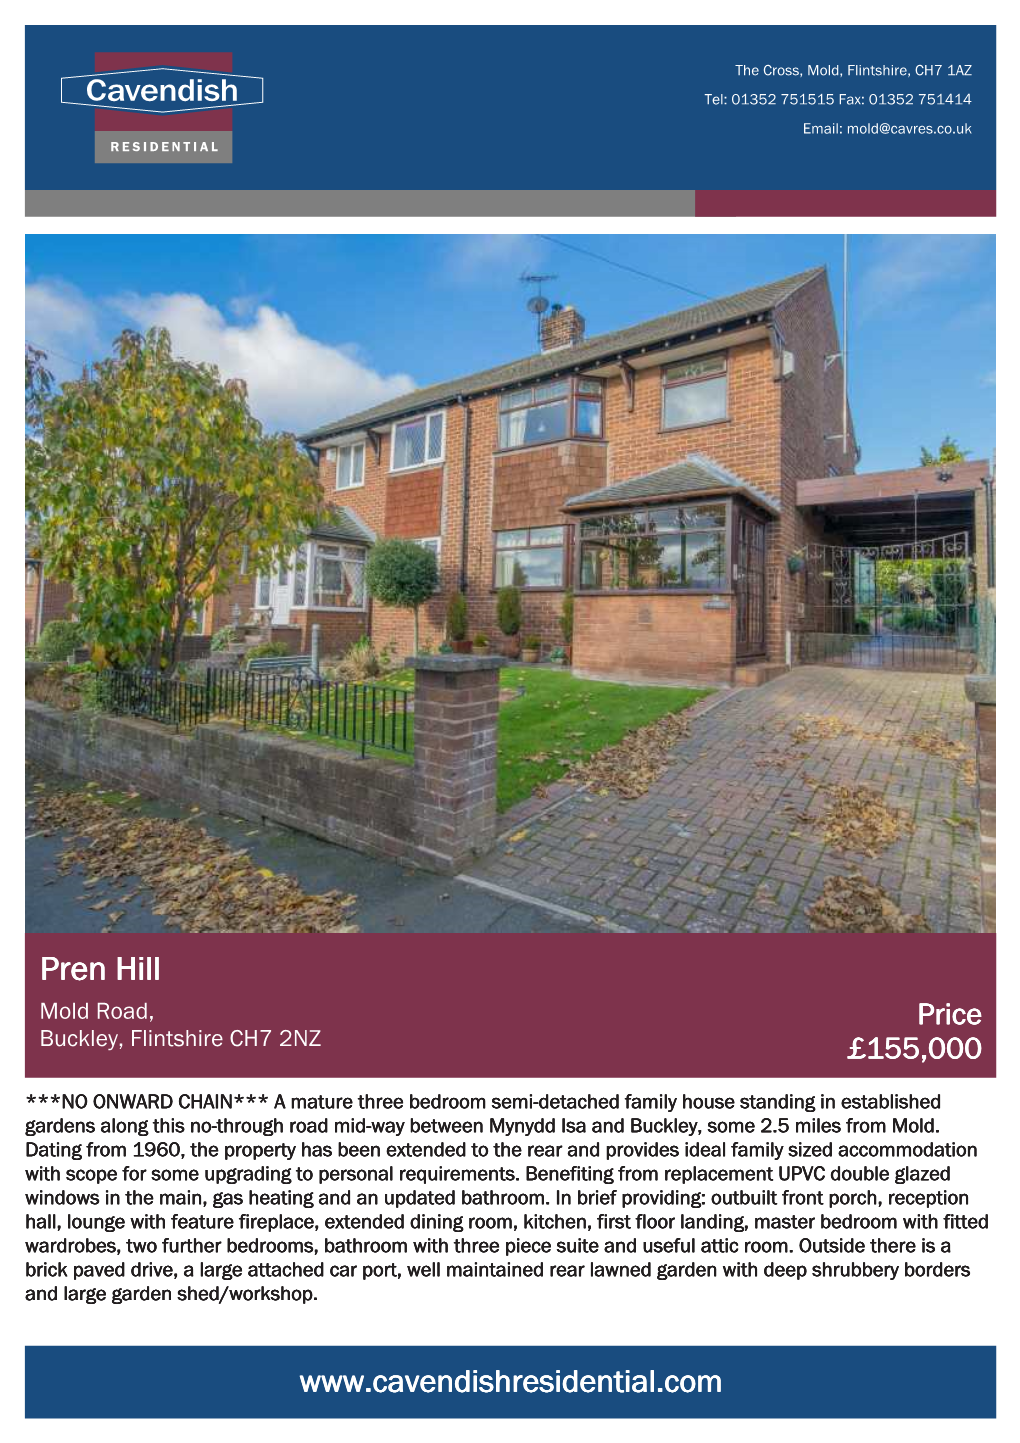 Pren Hill Mold Road, Price Buckley, Flintshire CH7 2NZ £155,000